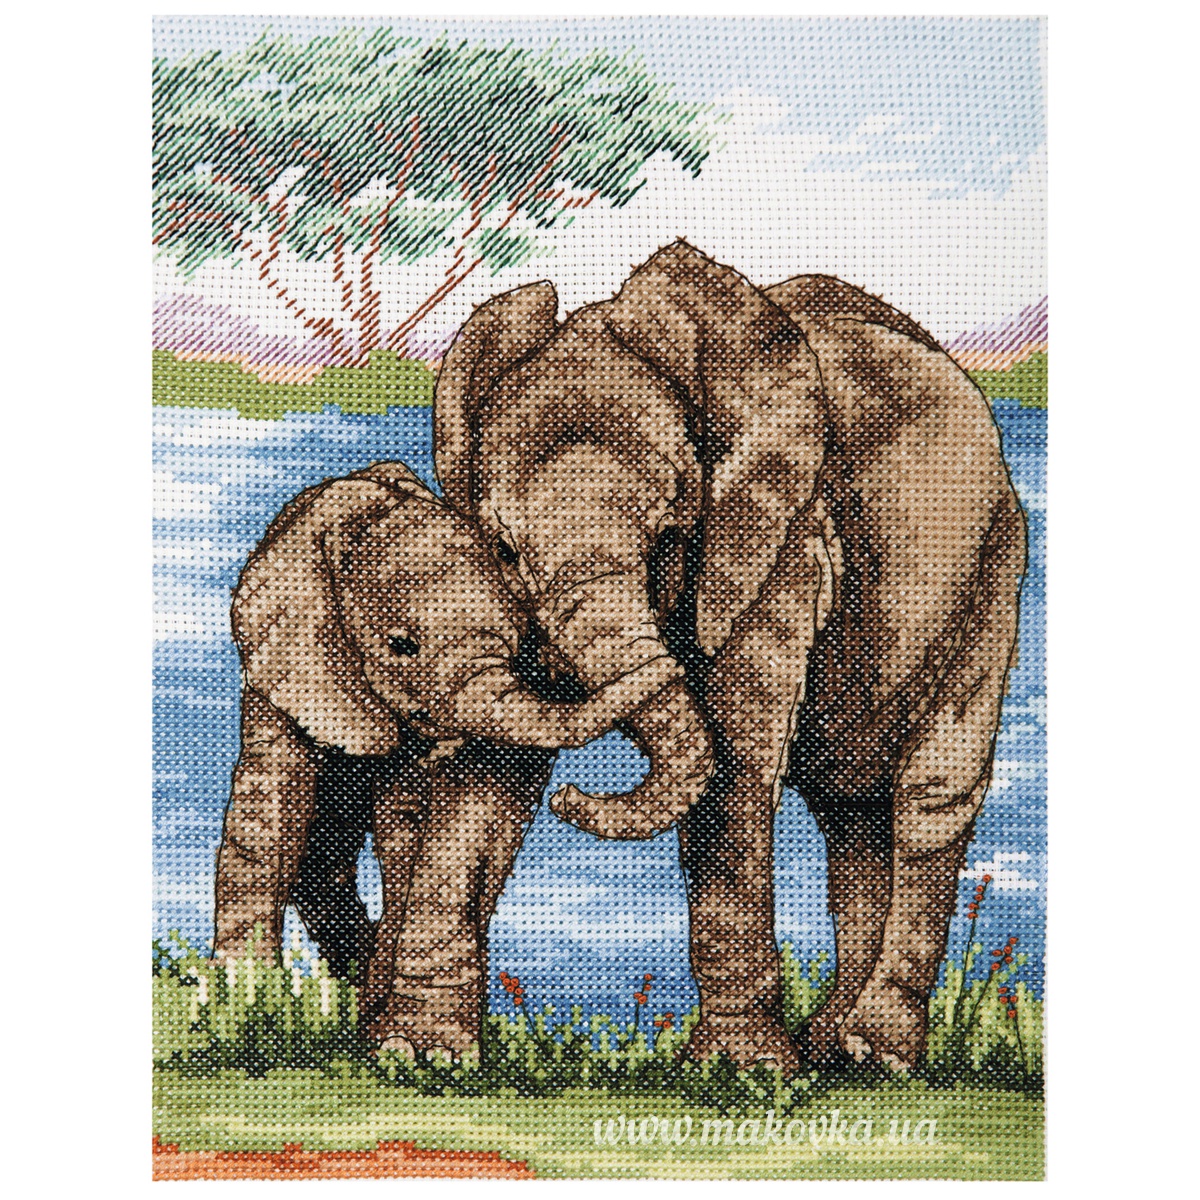 PCE963 Слоны (Elephants) ANCHOR набор для вышивания